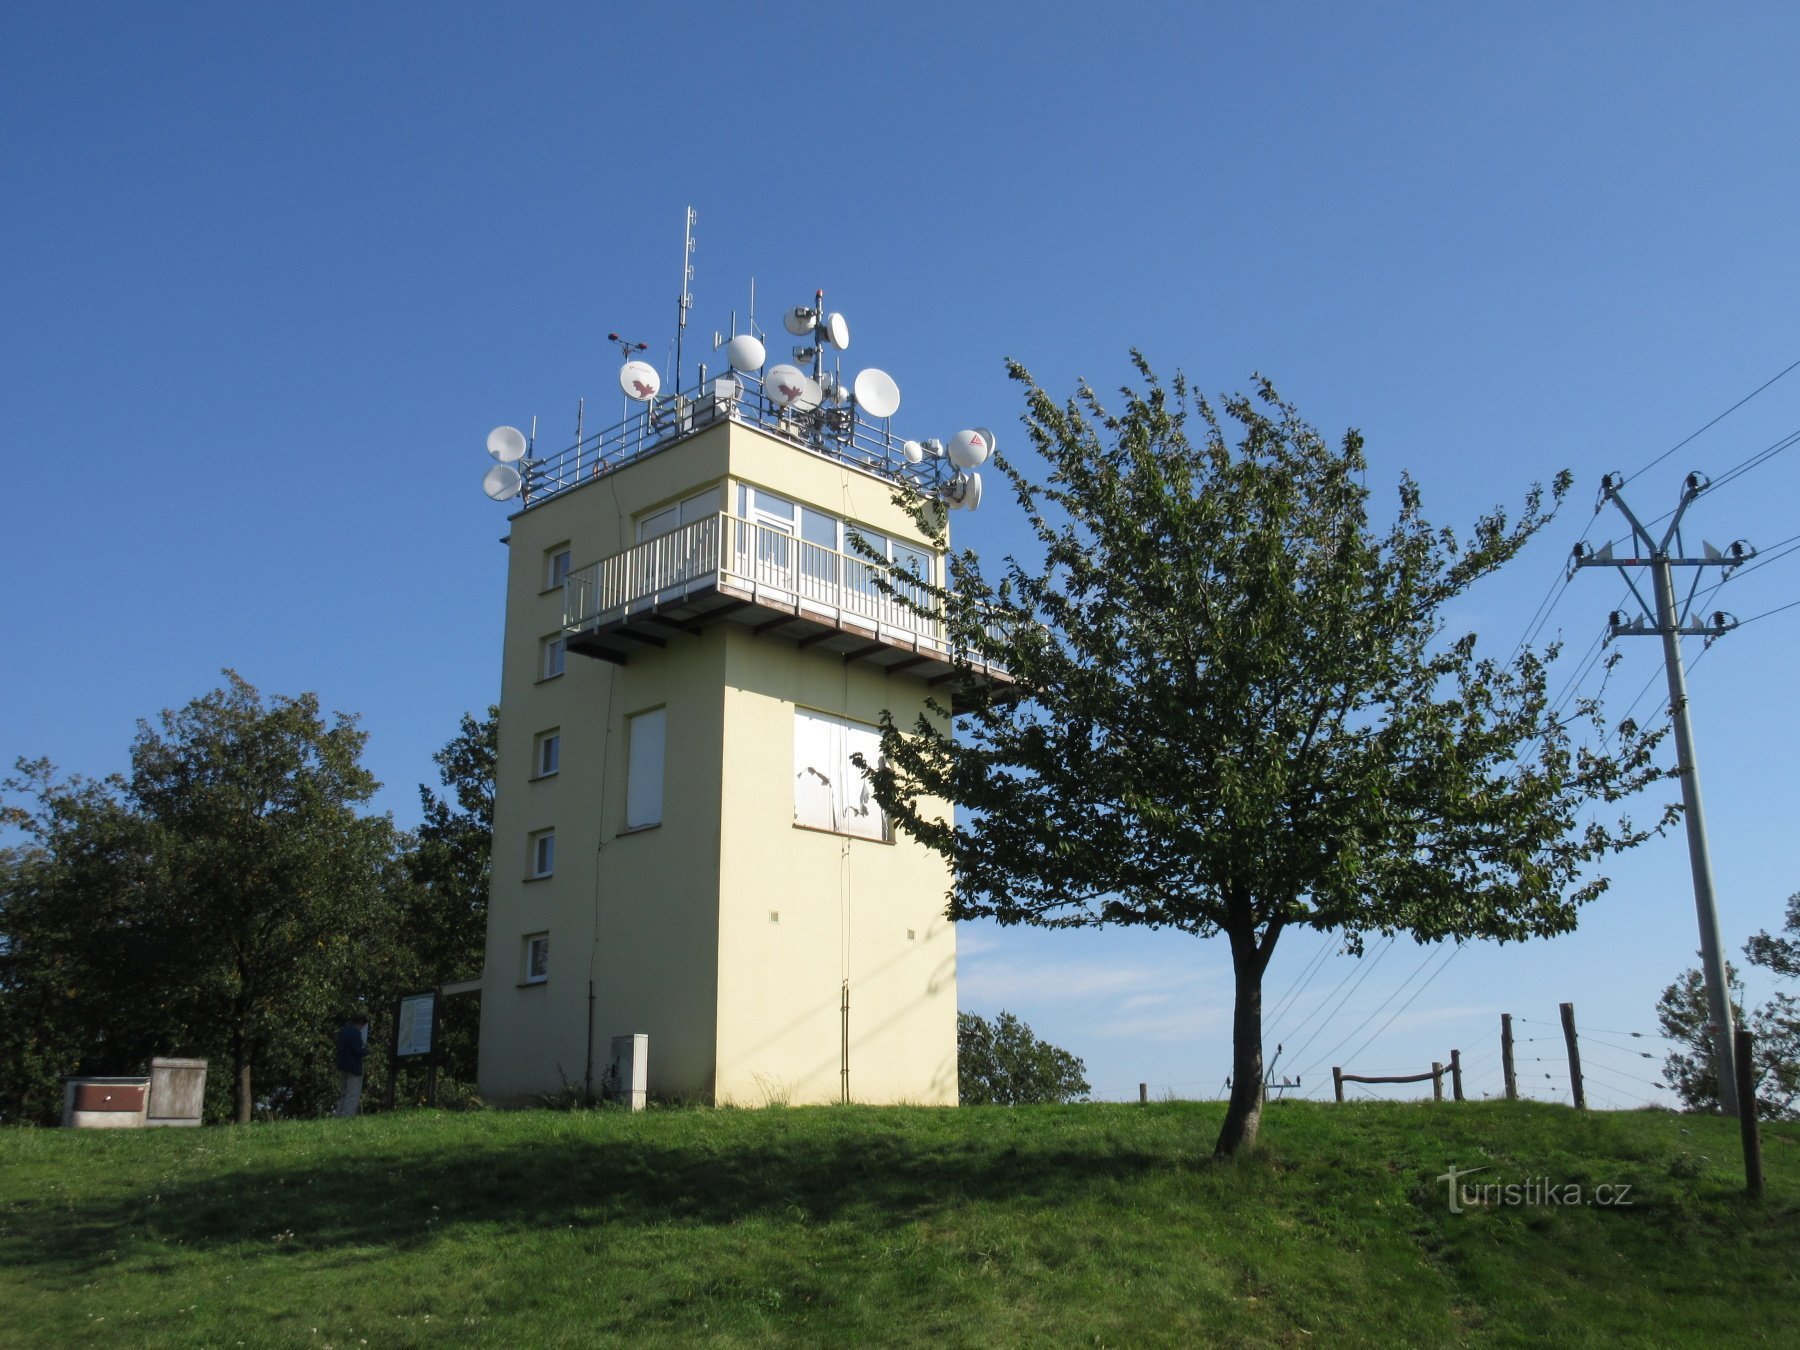 Malhostovice – village and Zlobice observation tower